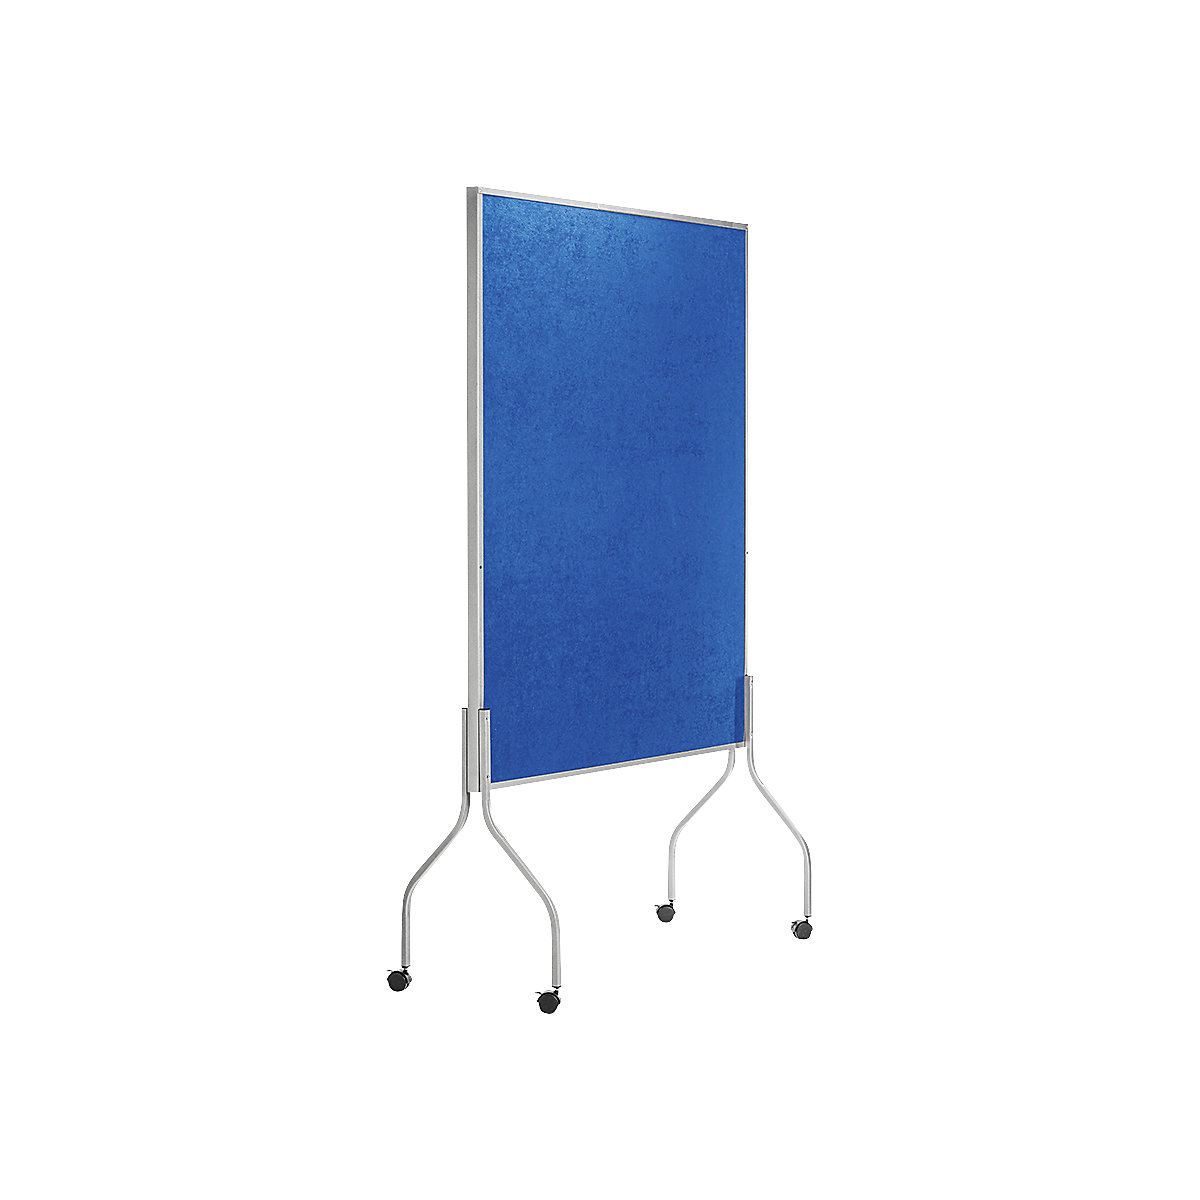 Moderationswand, mobil, HxBxT 1950 x 1200 x 680 mm, Textilbezug blau